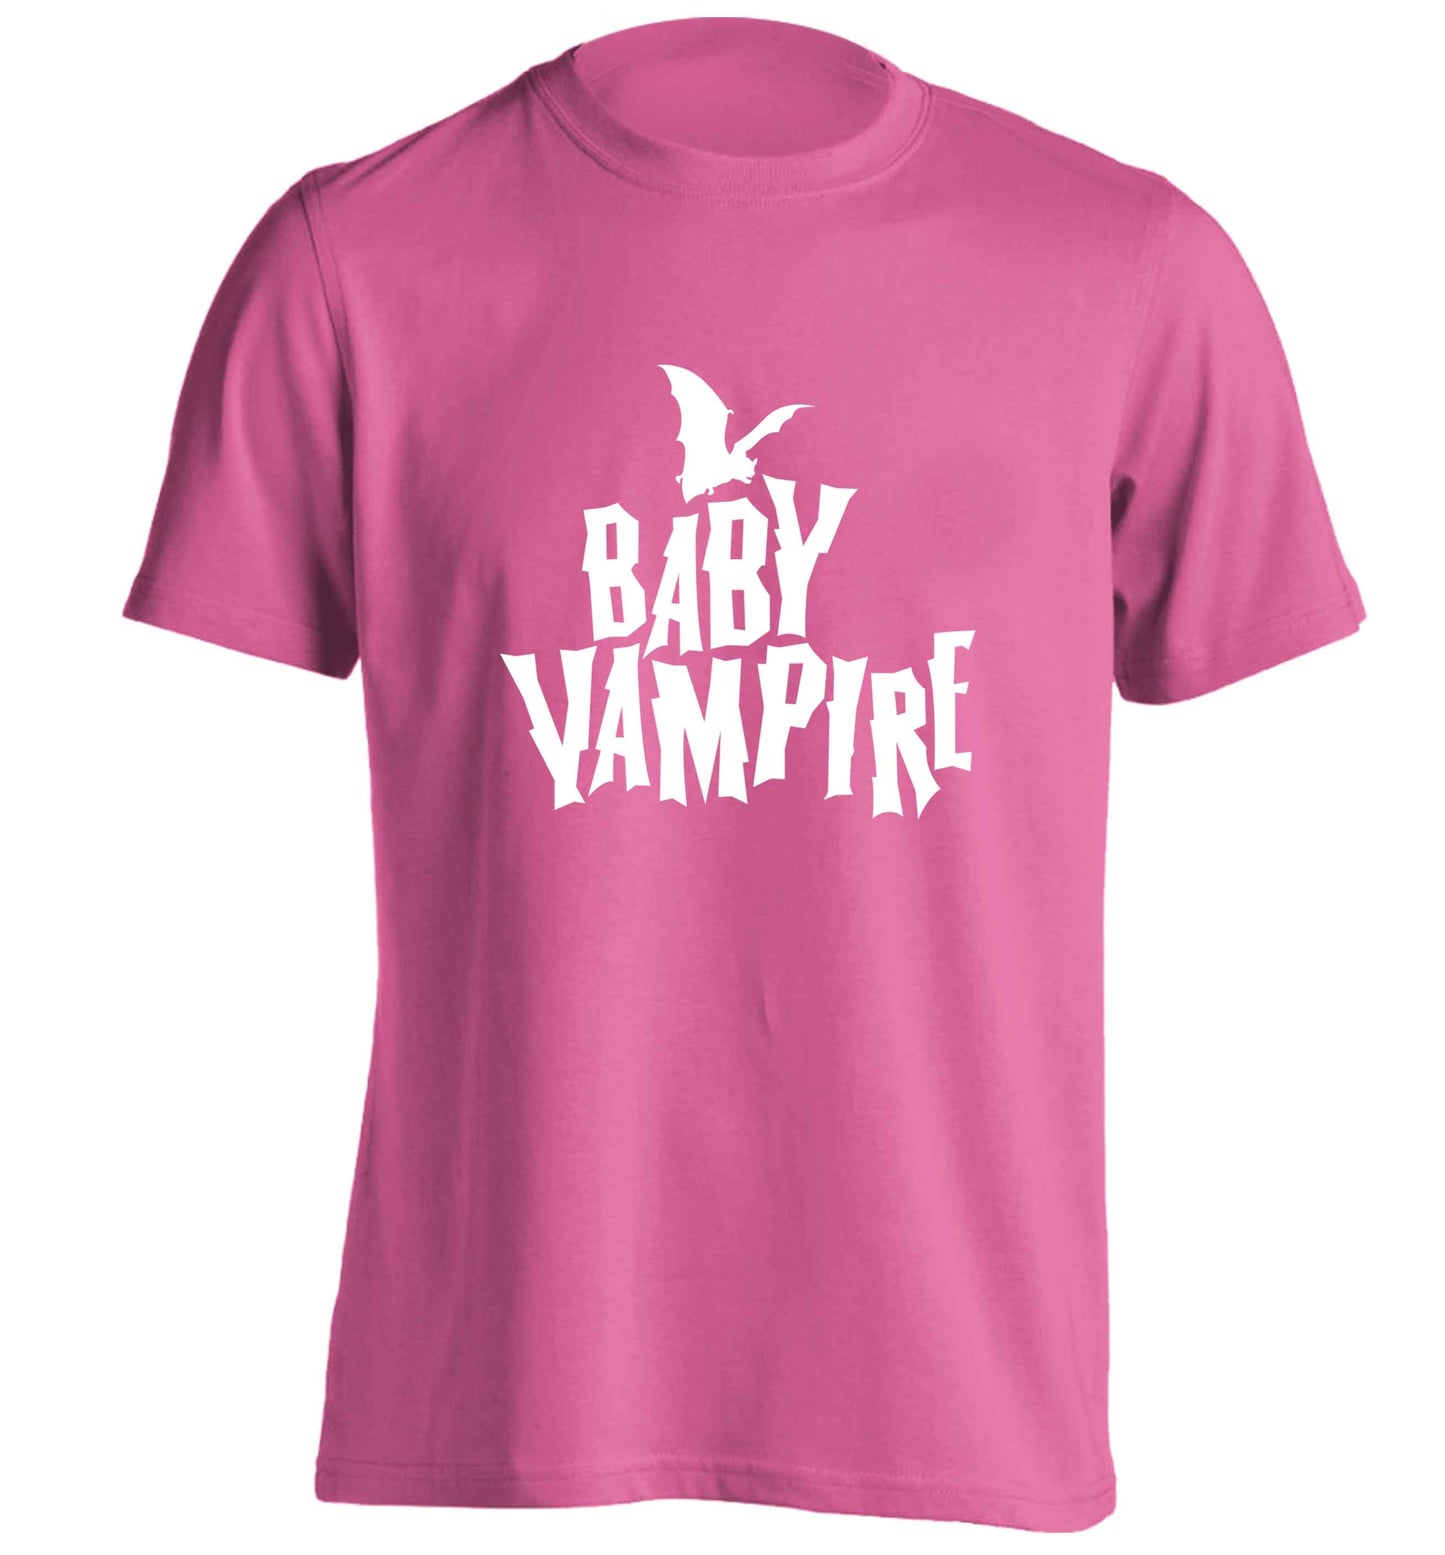 Baby vampire adults unisex pink Tshirt 2XL